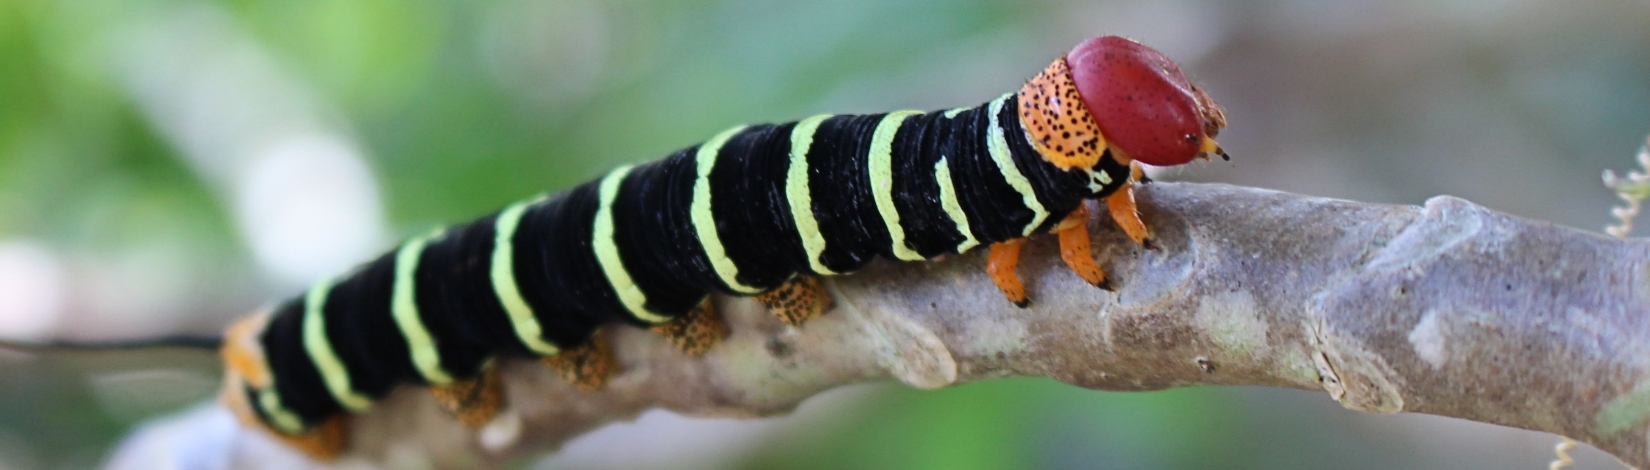 Large caterpillar crawling on branch.  